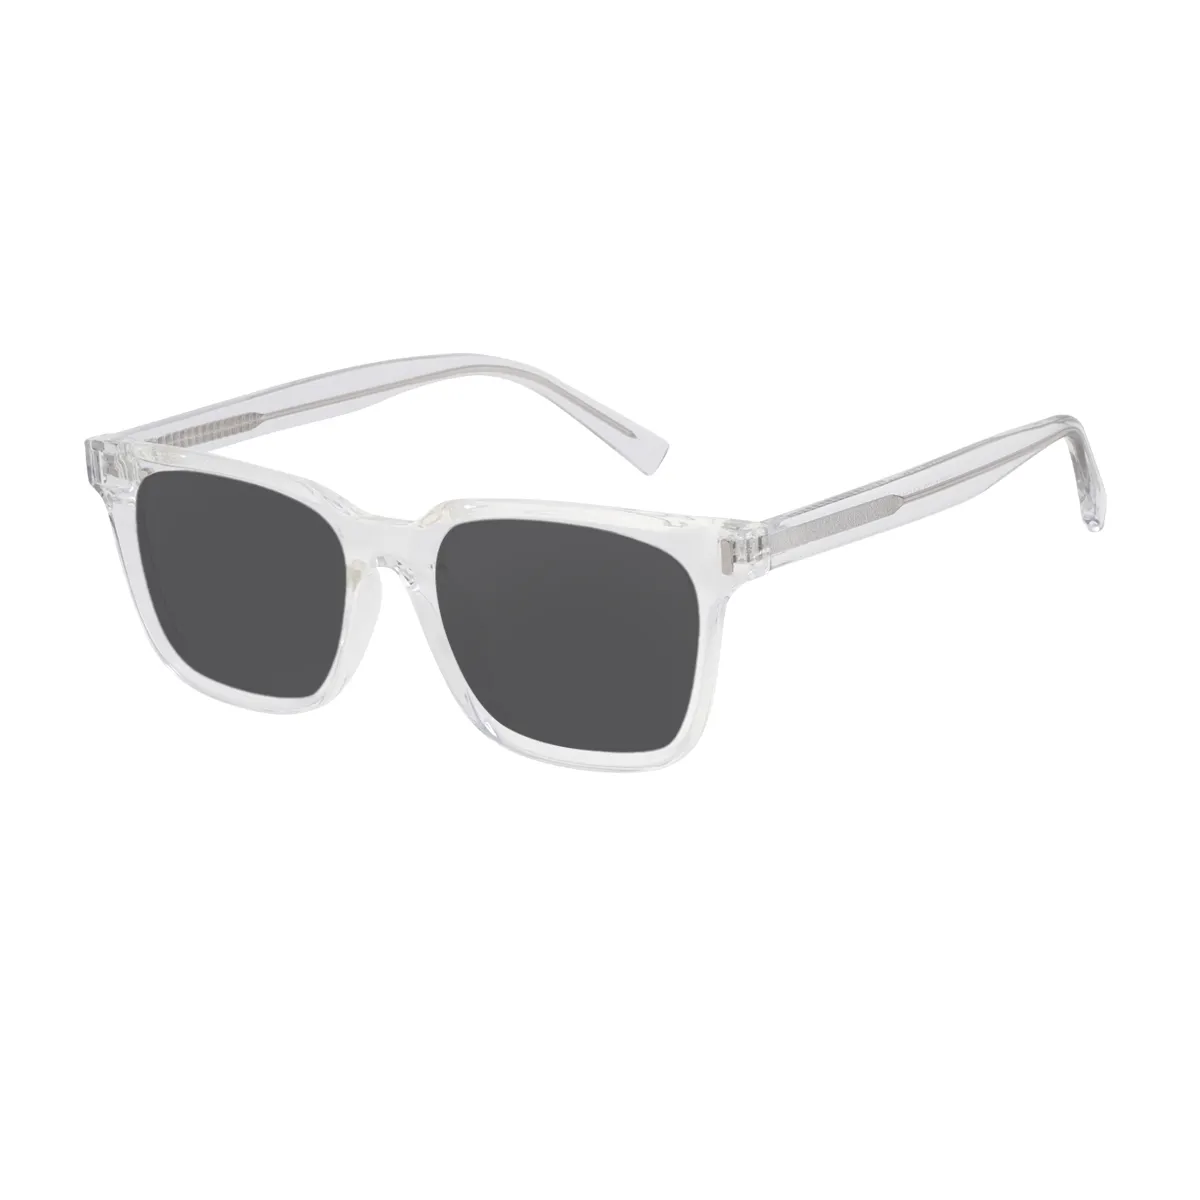 Shay - Square Translucent Sunglasses for Men & Women